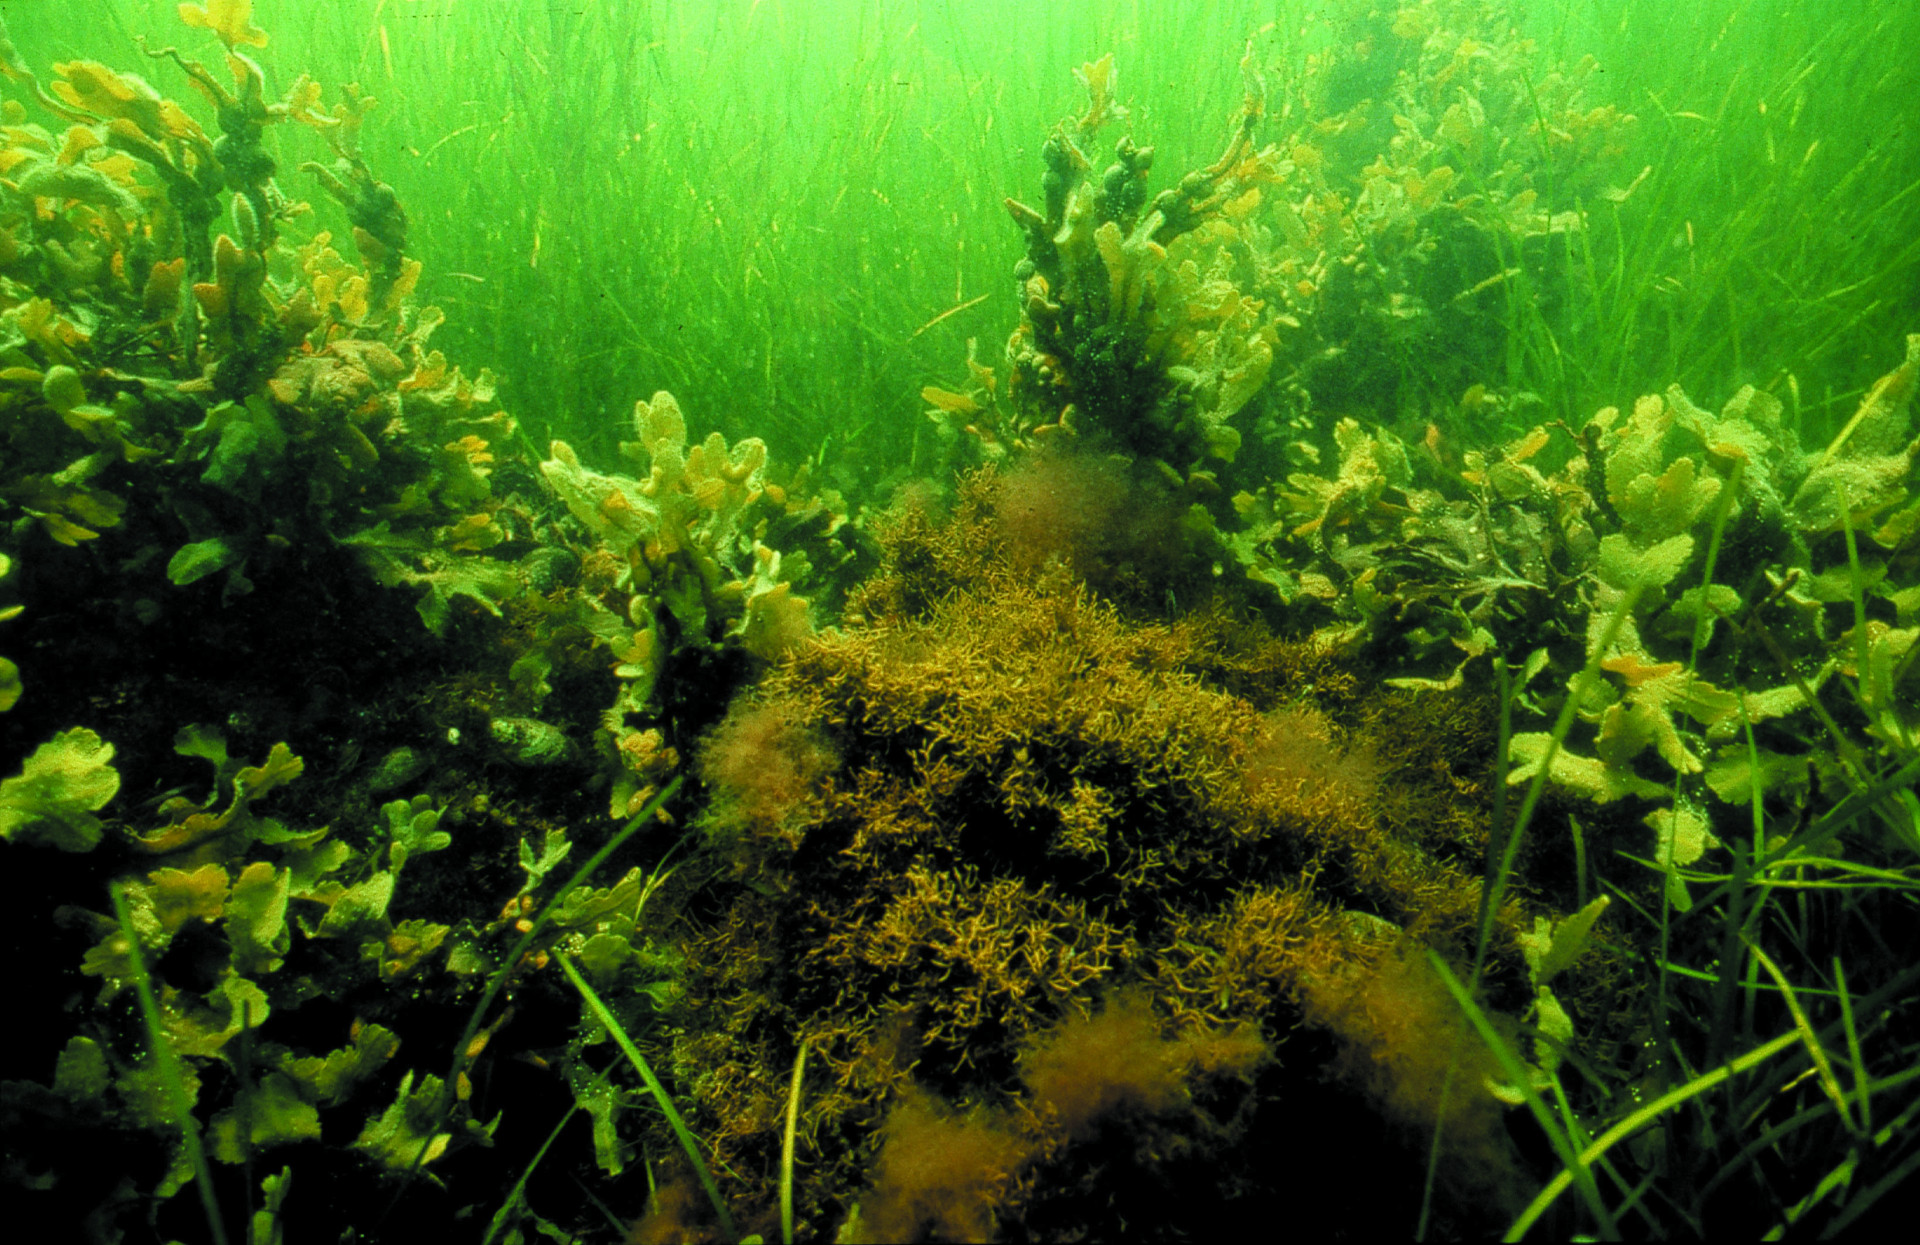 Brown algae, red algae and sea grass in the Baltic Sea